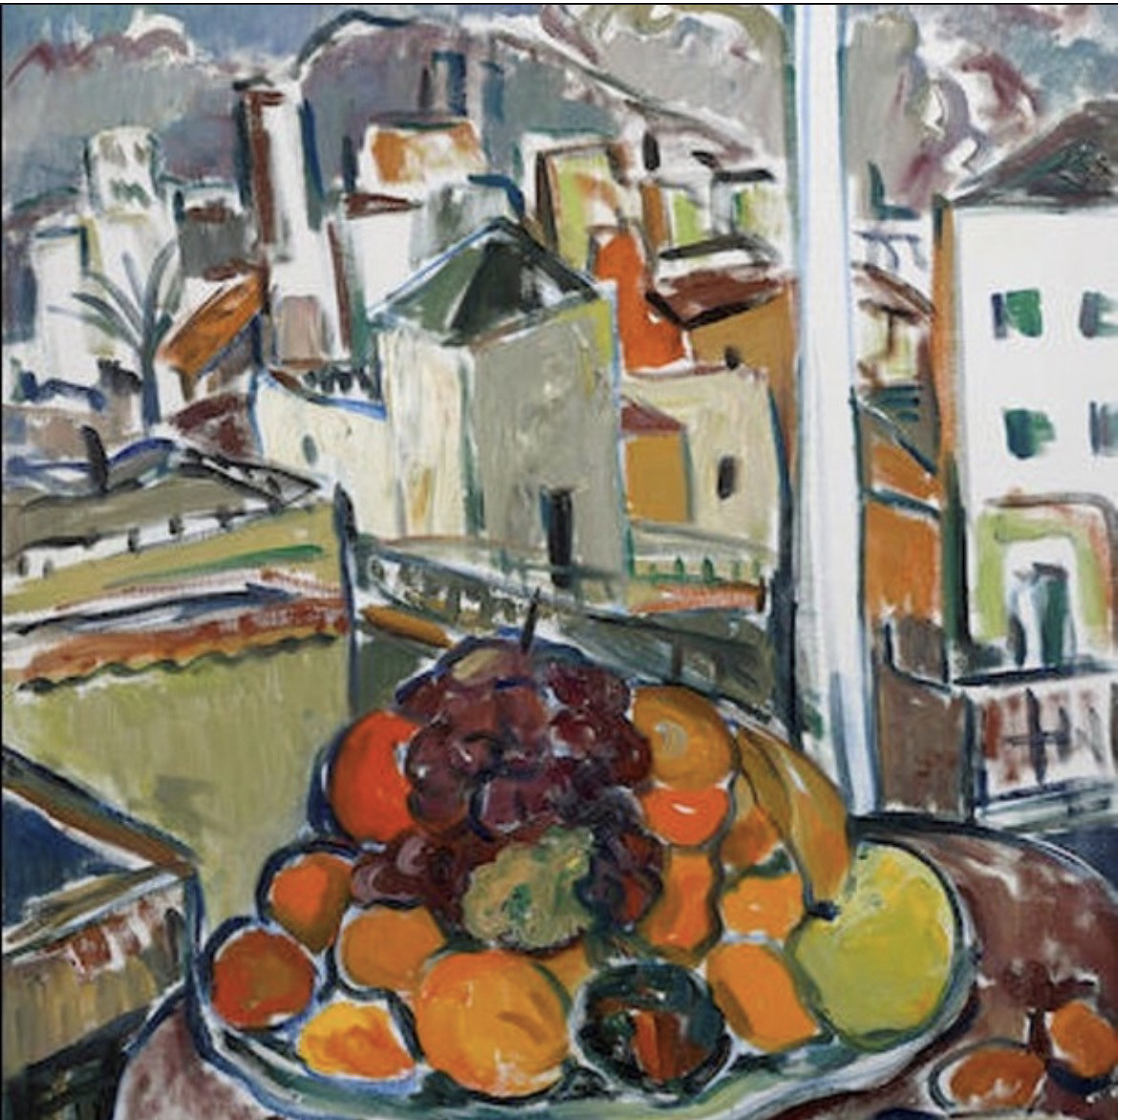 ARTSPLIT Irma Stern, 'A Still Life of Fruit with A Spanish City Beyond', 1962, oil on canvas. Courtesy of ARTSPLIT